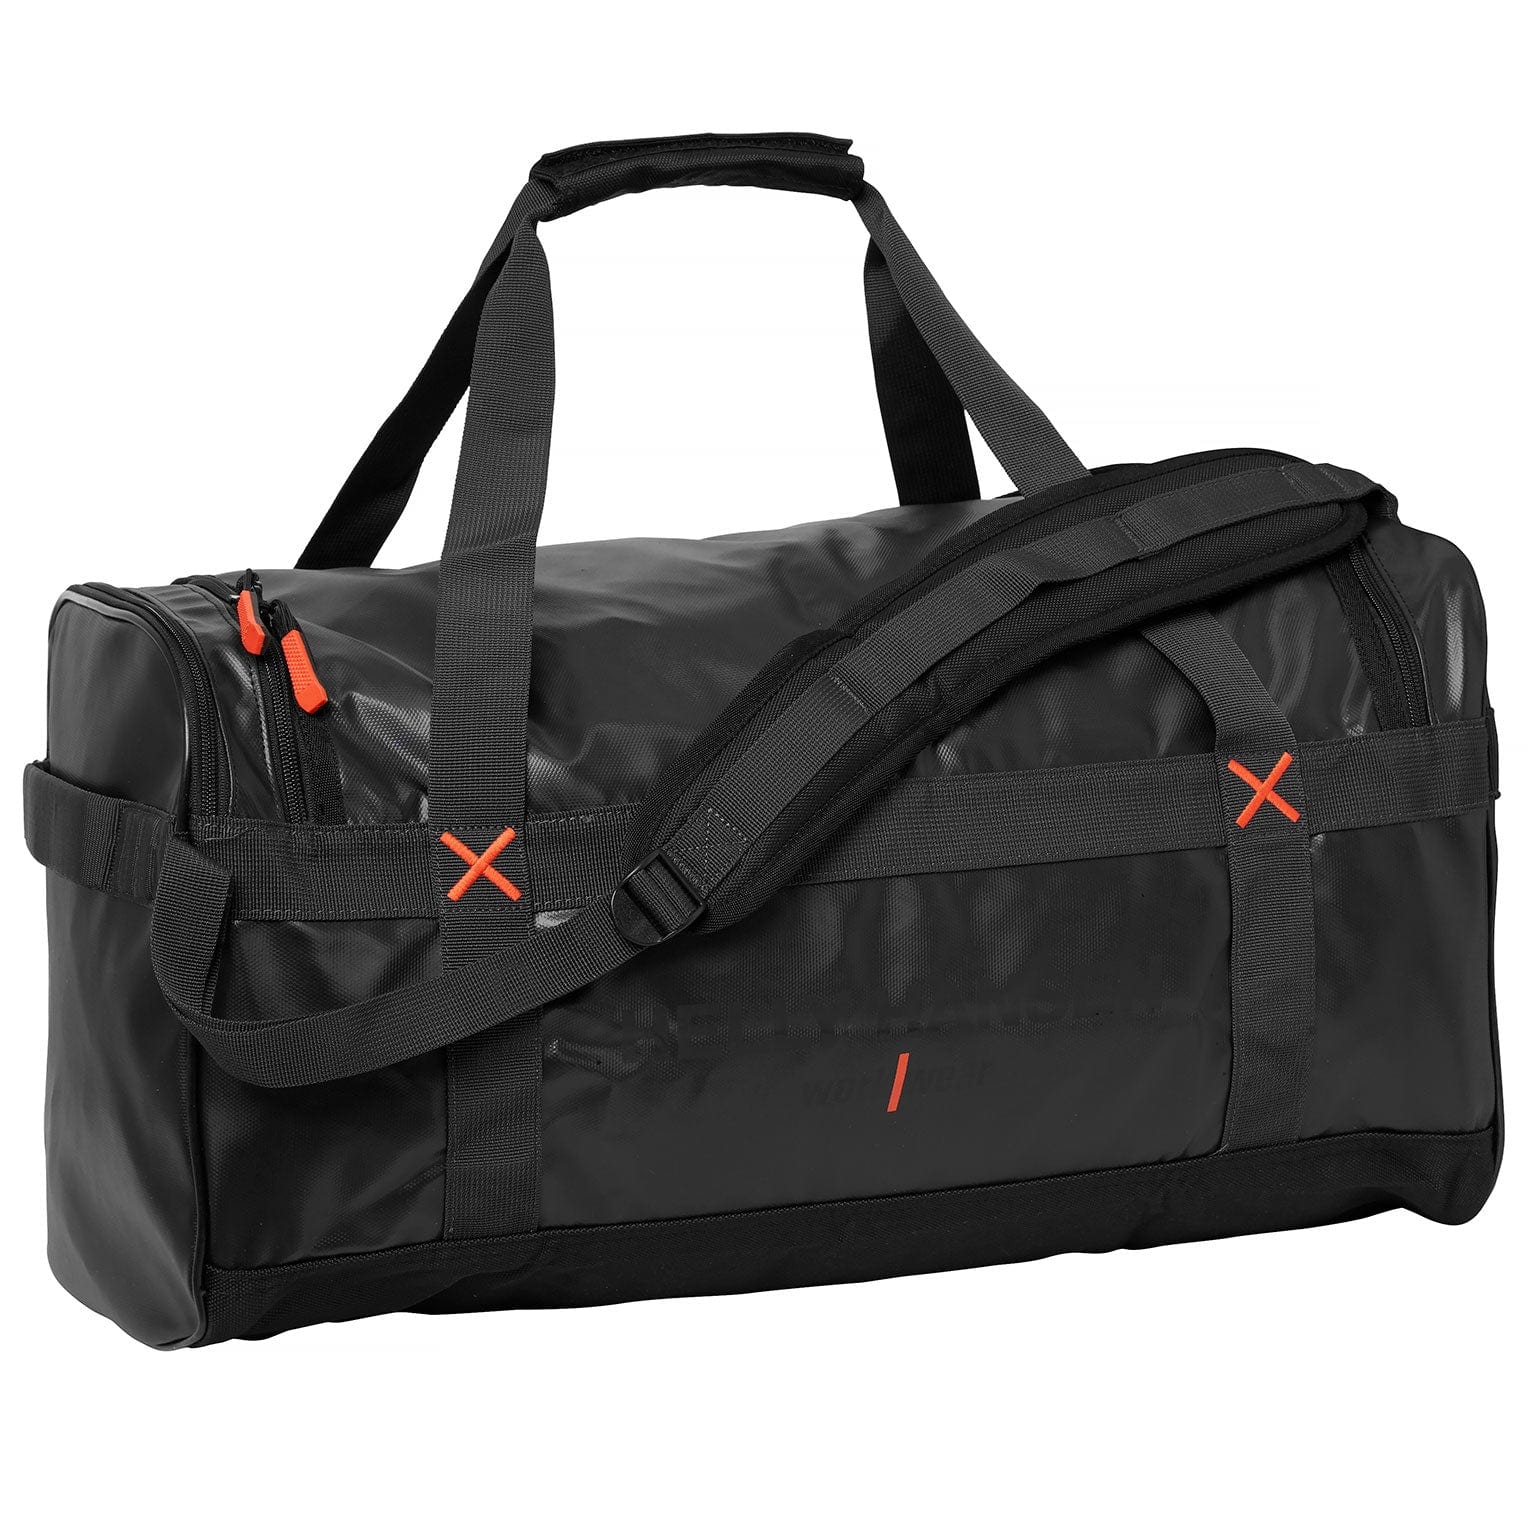 Helly Hansen Workwear Bags 120L / Black Helly Hansen Workwear - HH Duffel Bag 120L